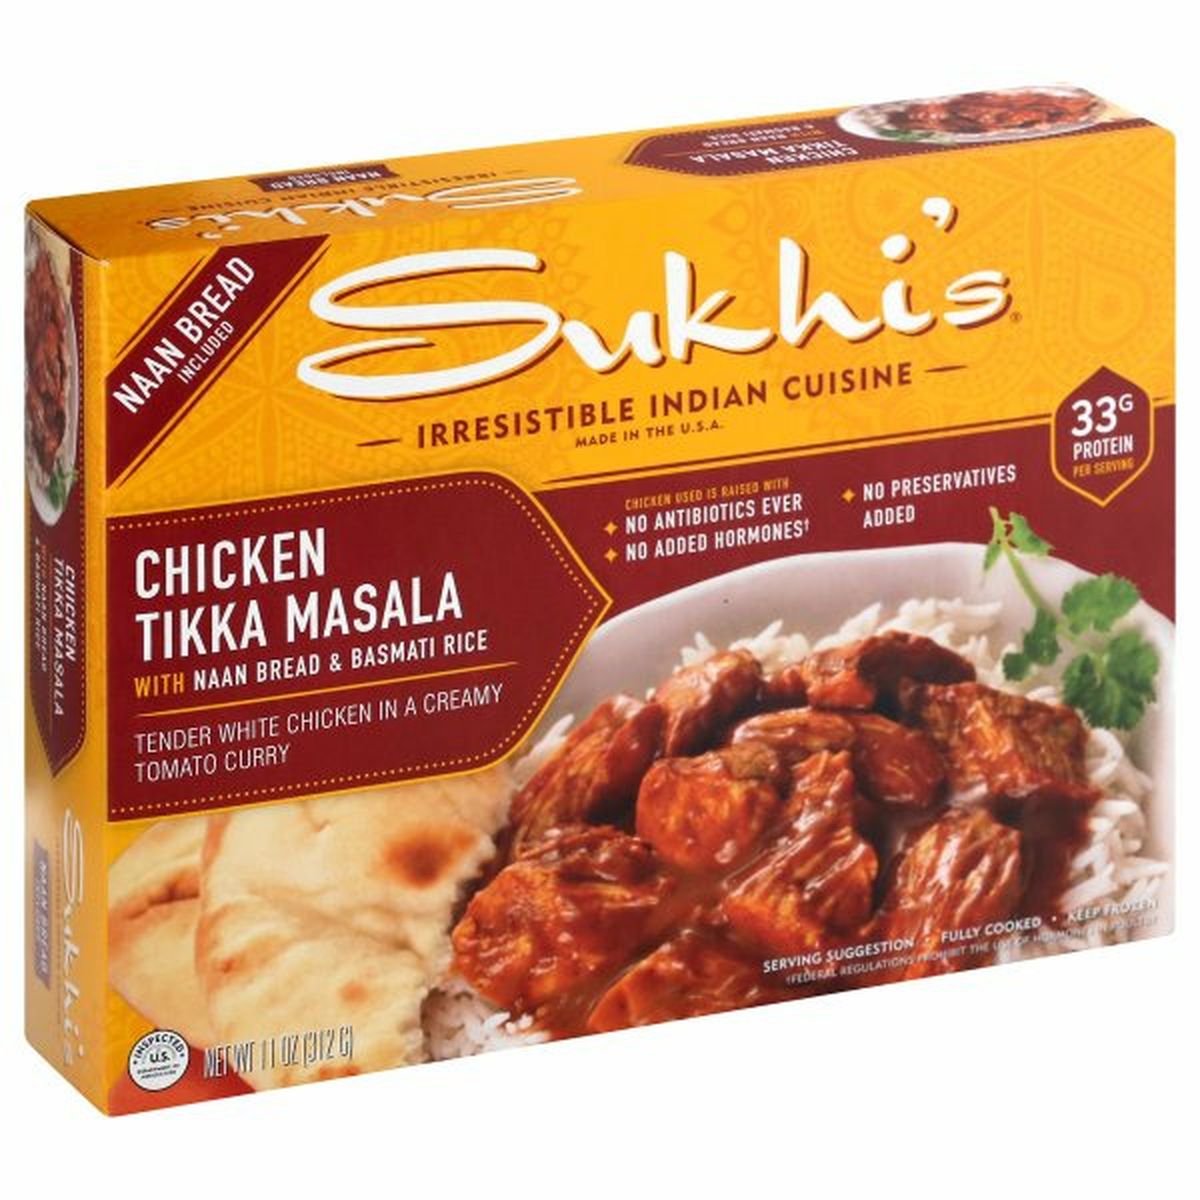 Calories in Sukhi's Chicken Tikka Masala